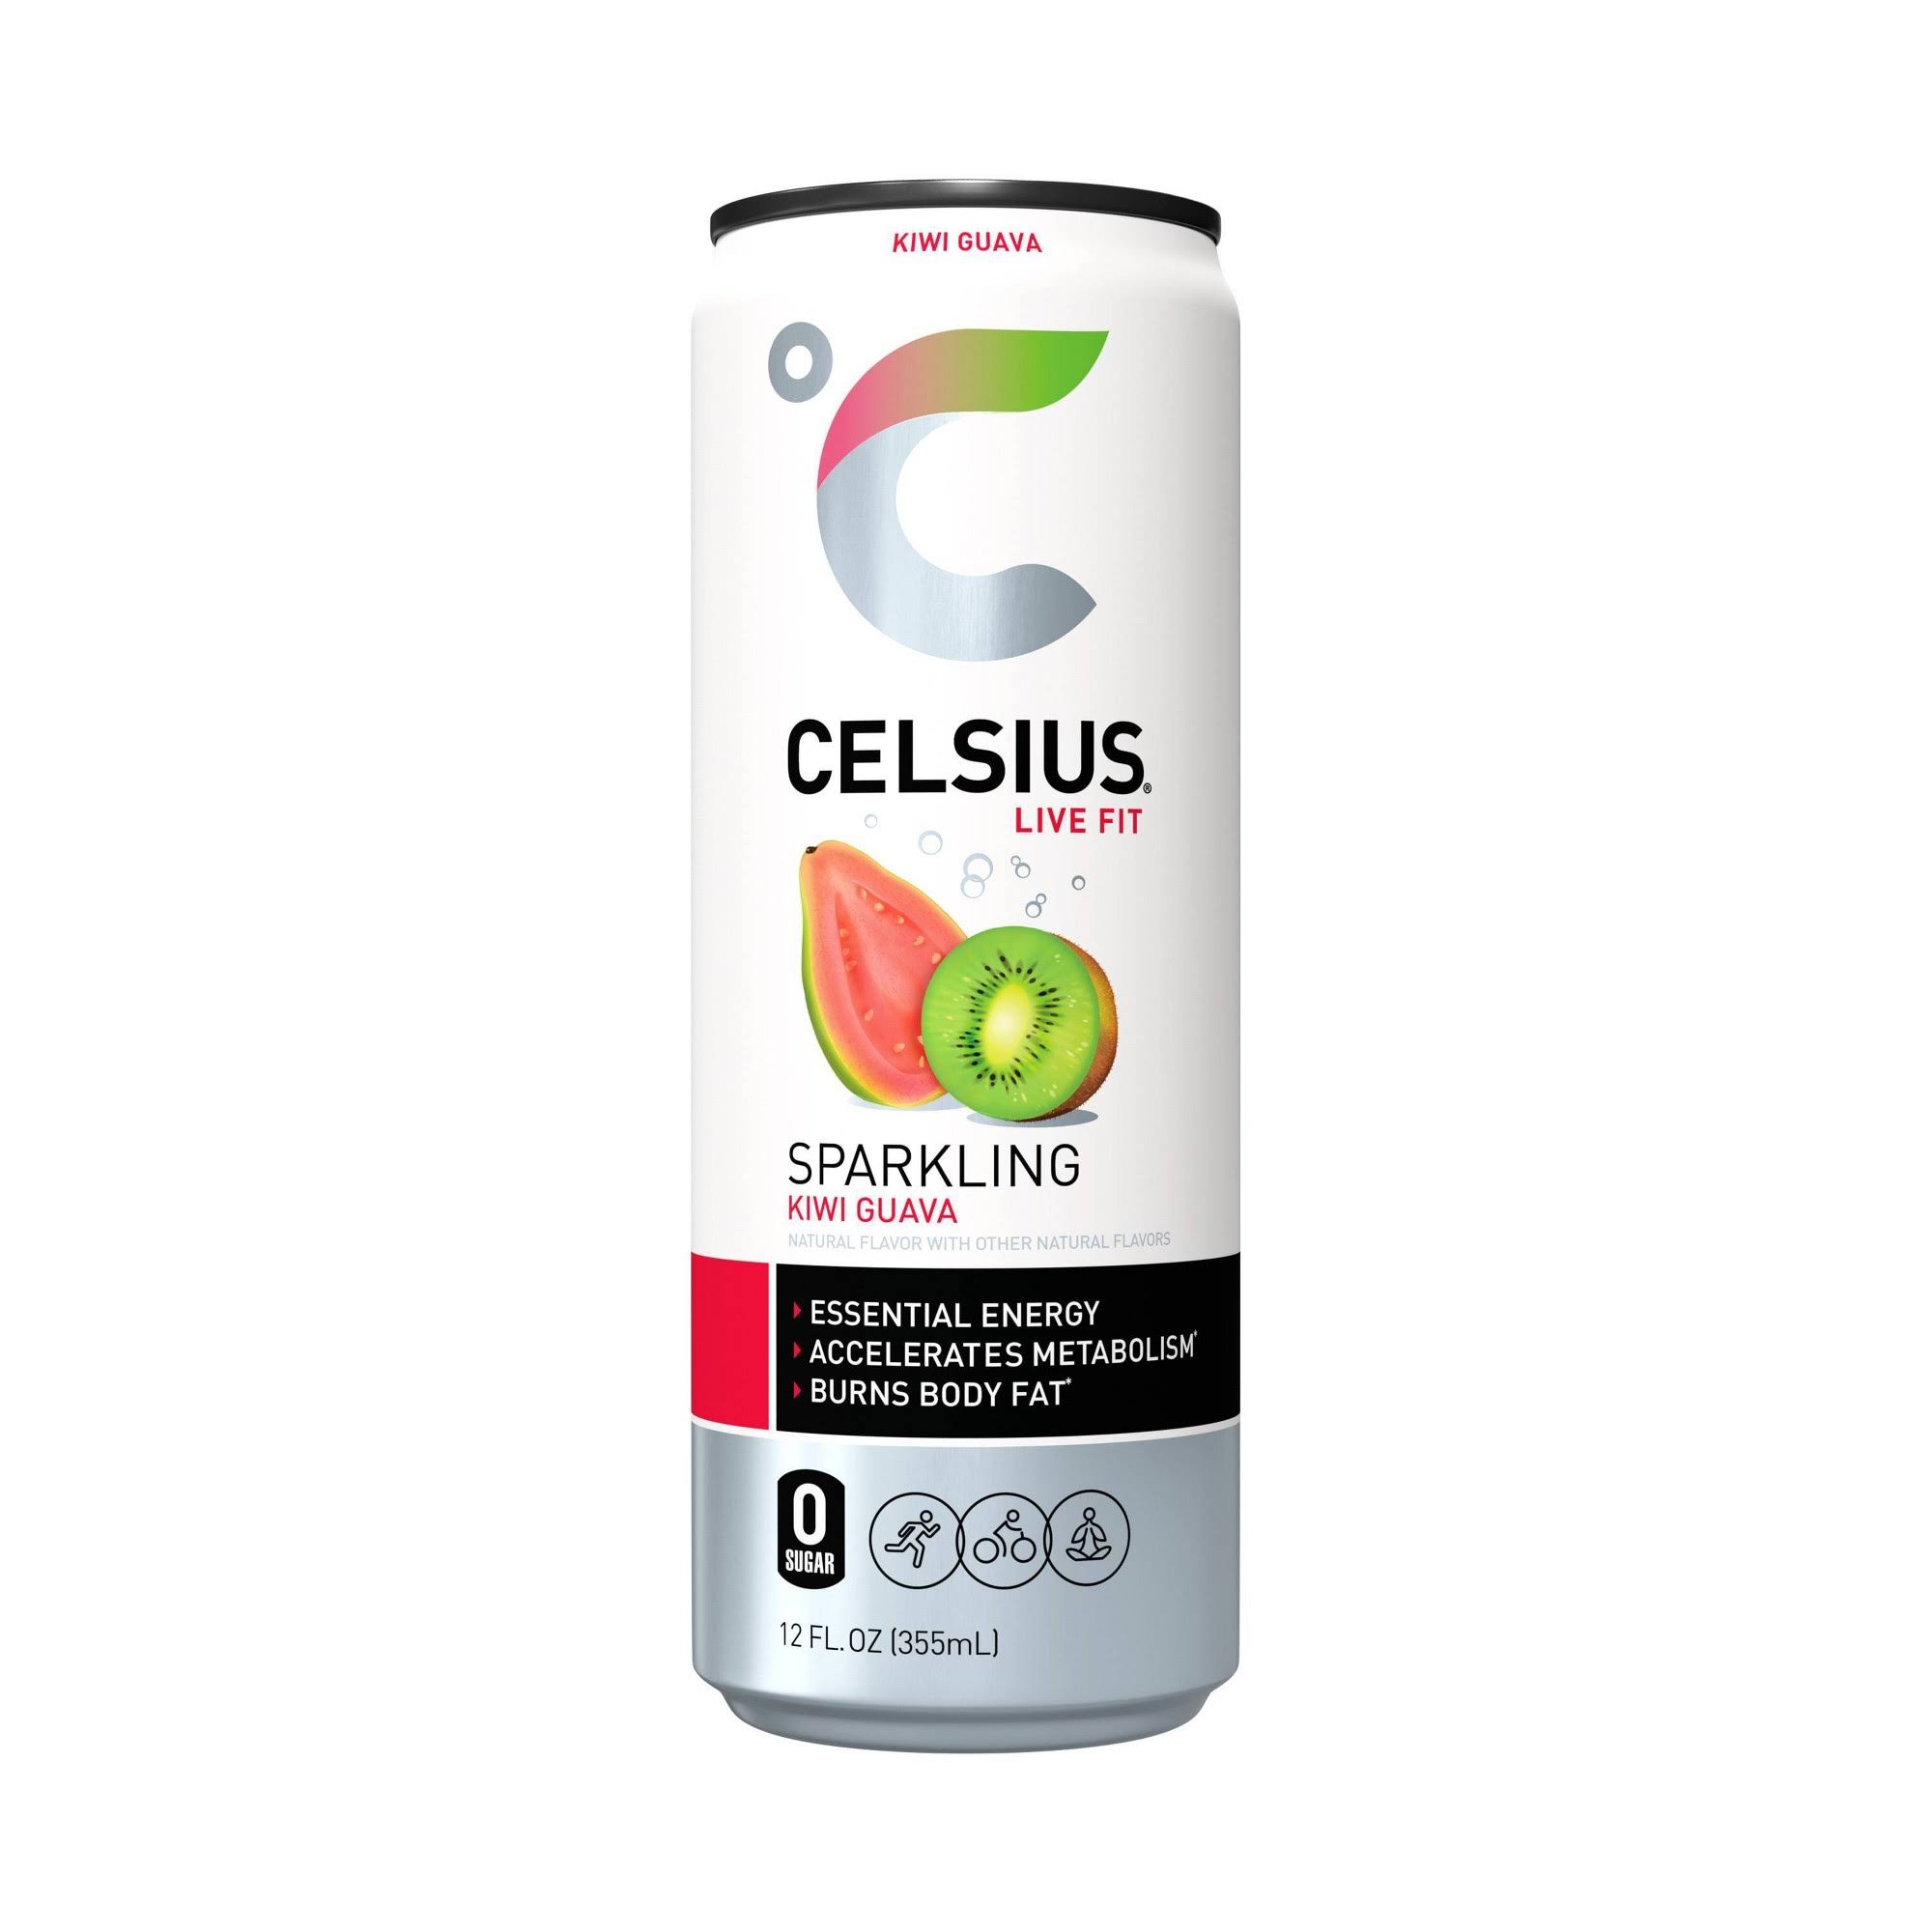 Celsius Live Fit, Sparkling Kiwi Guava / Pack of 12